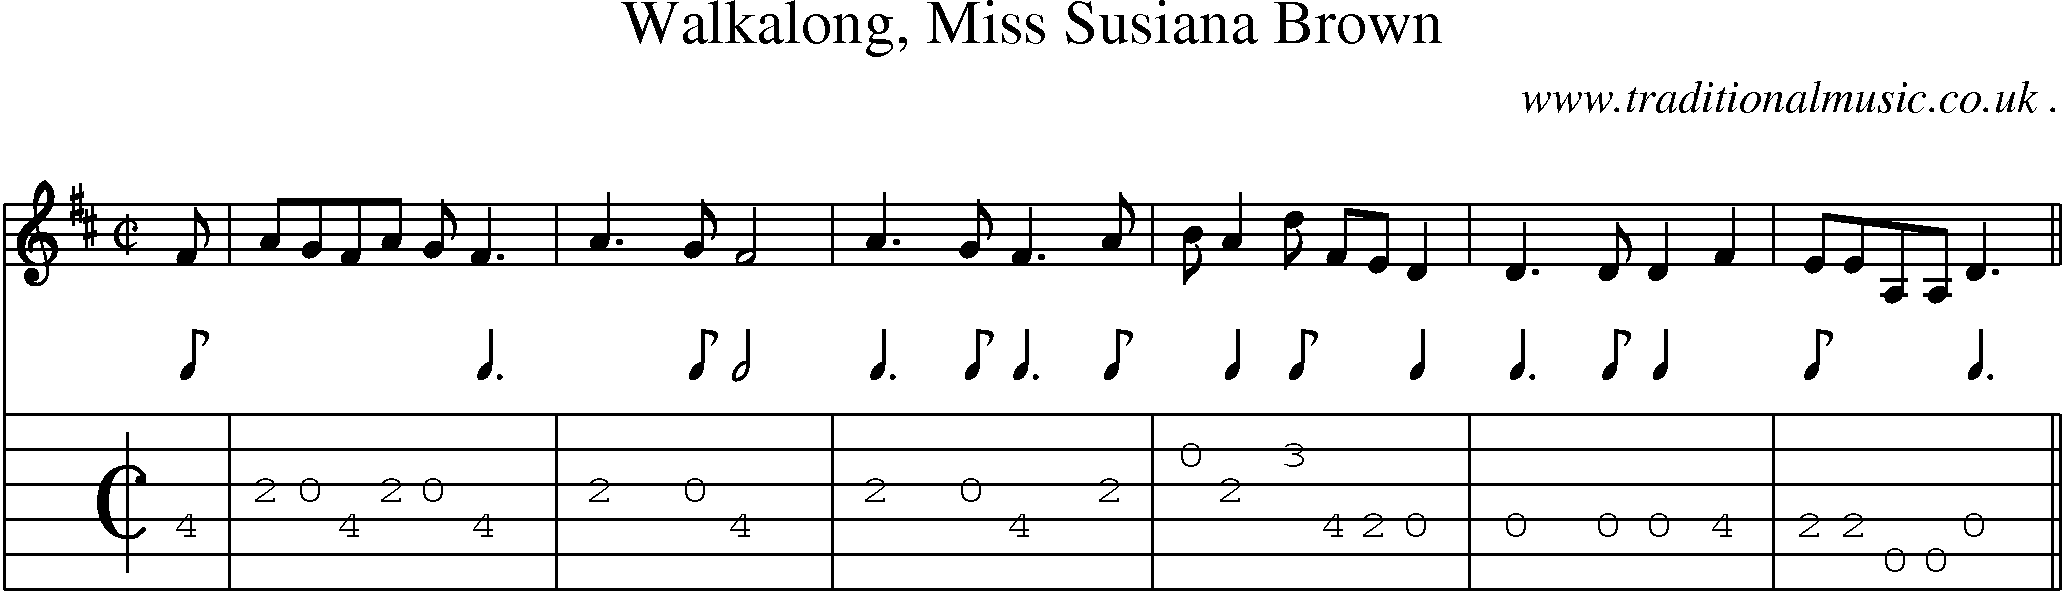 Sheet-Music and Guitar Tabs for Walkalong Miss Susiana Brown